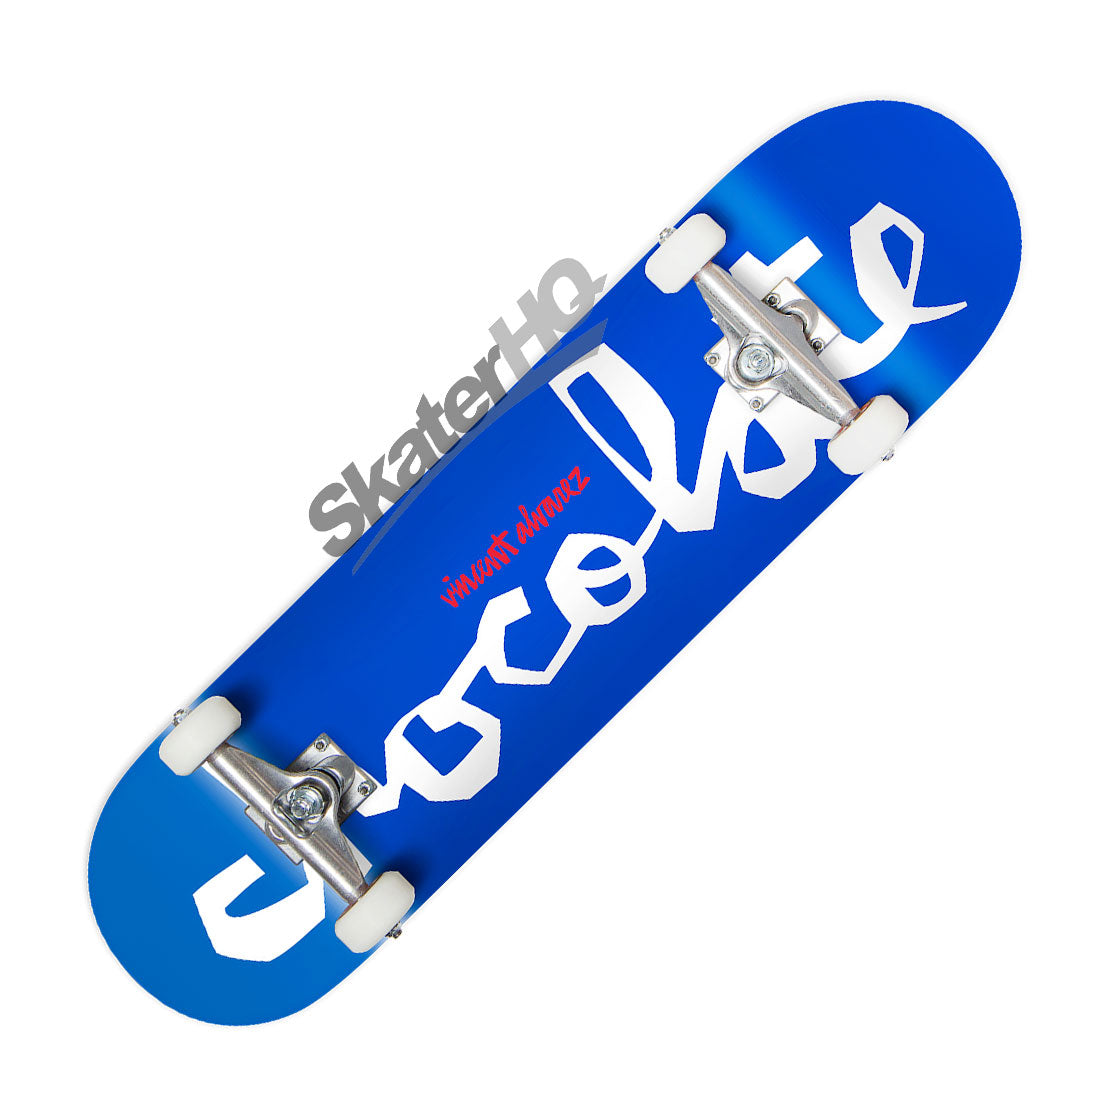 Chocolate Alvarez 7.375 Complete - Blue Skateboard Completes Modern Street